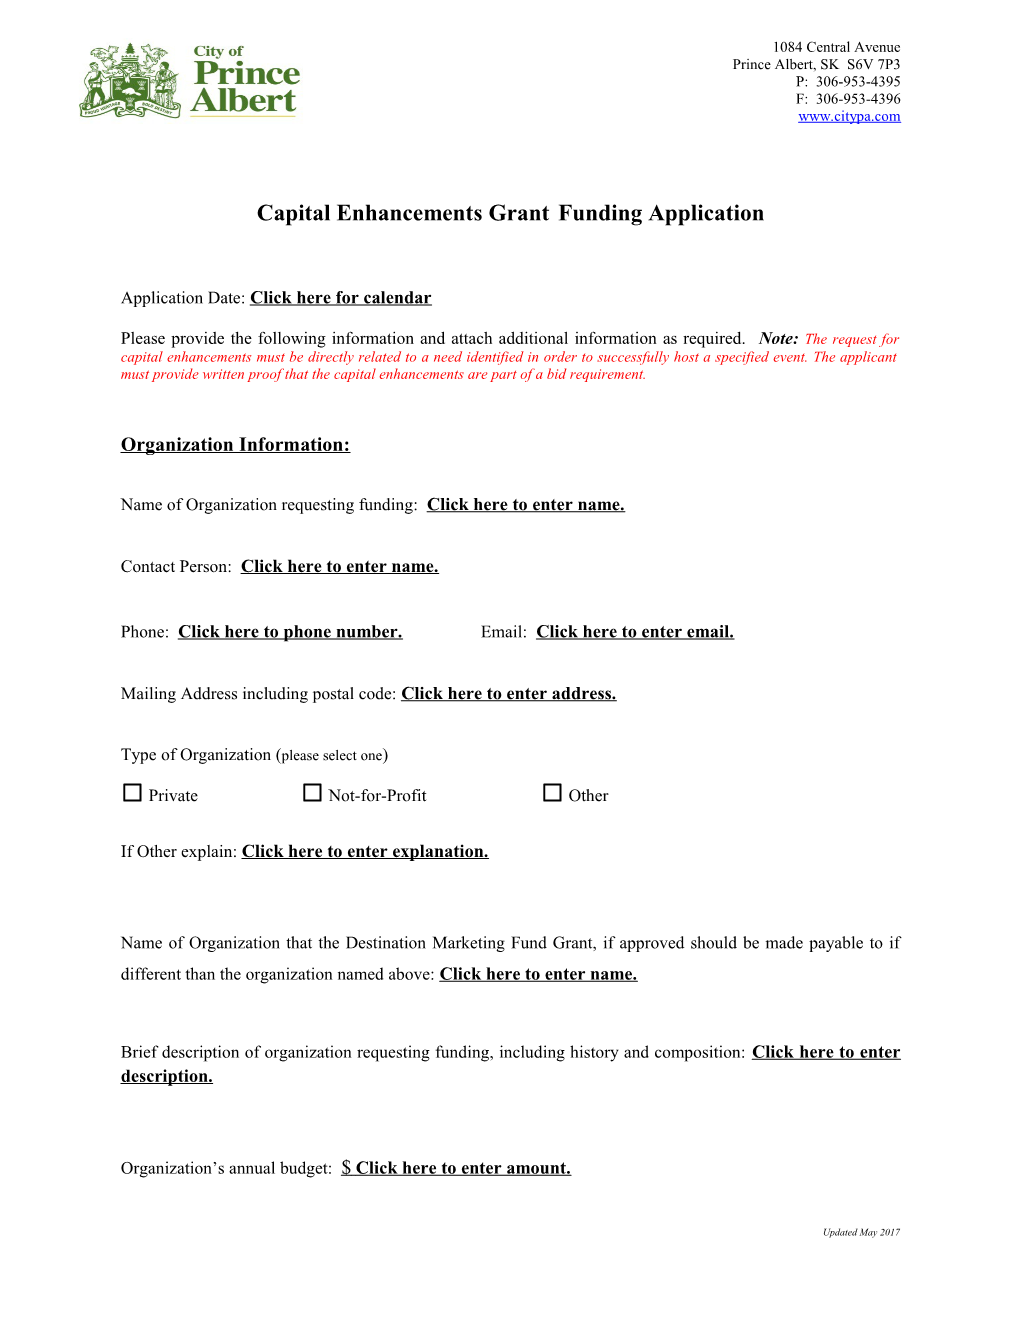 Capital Enhancements Grant Funding Application